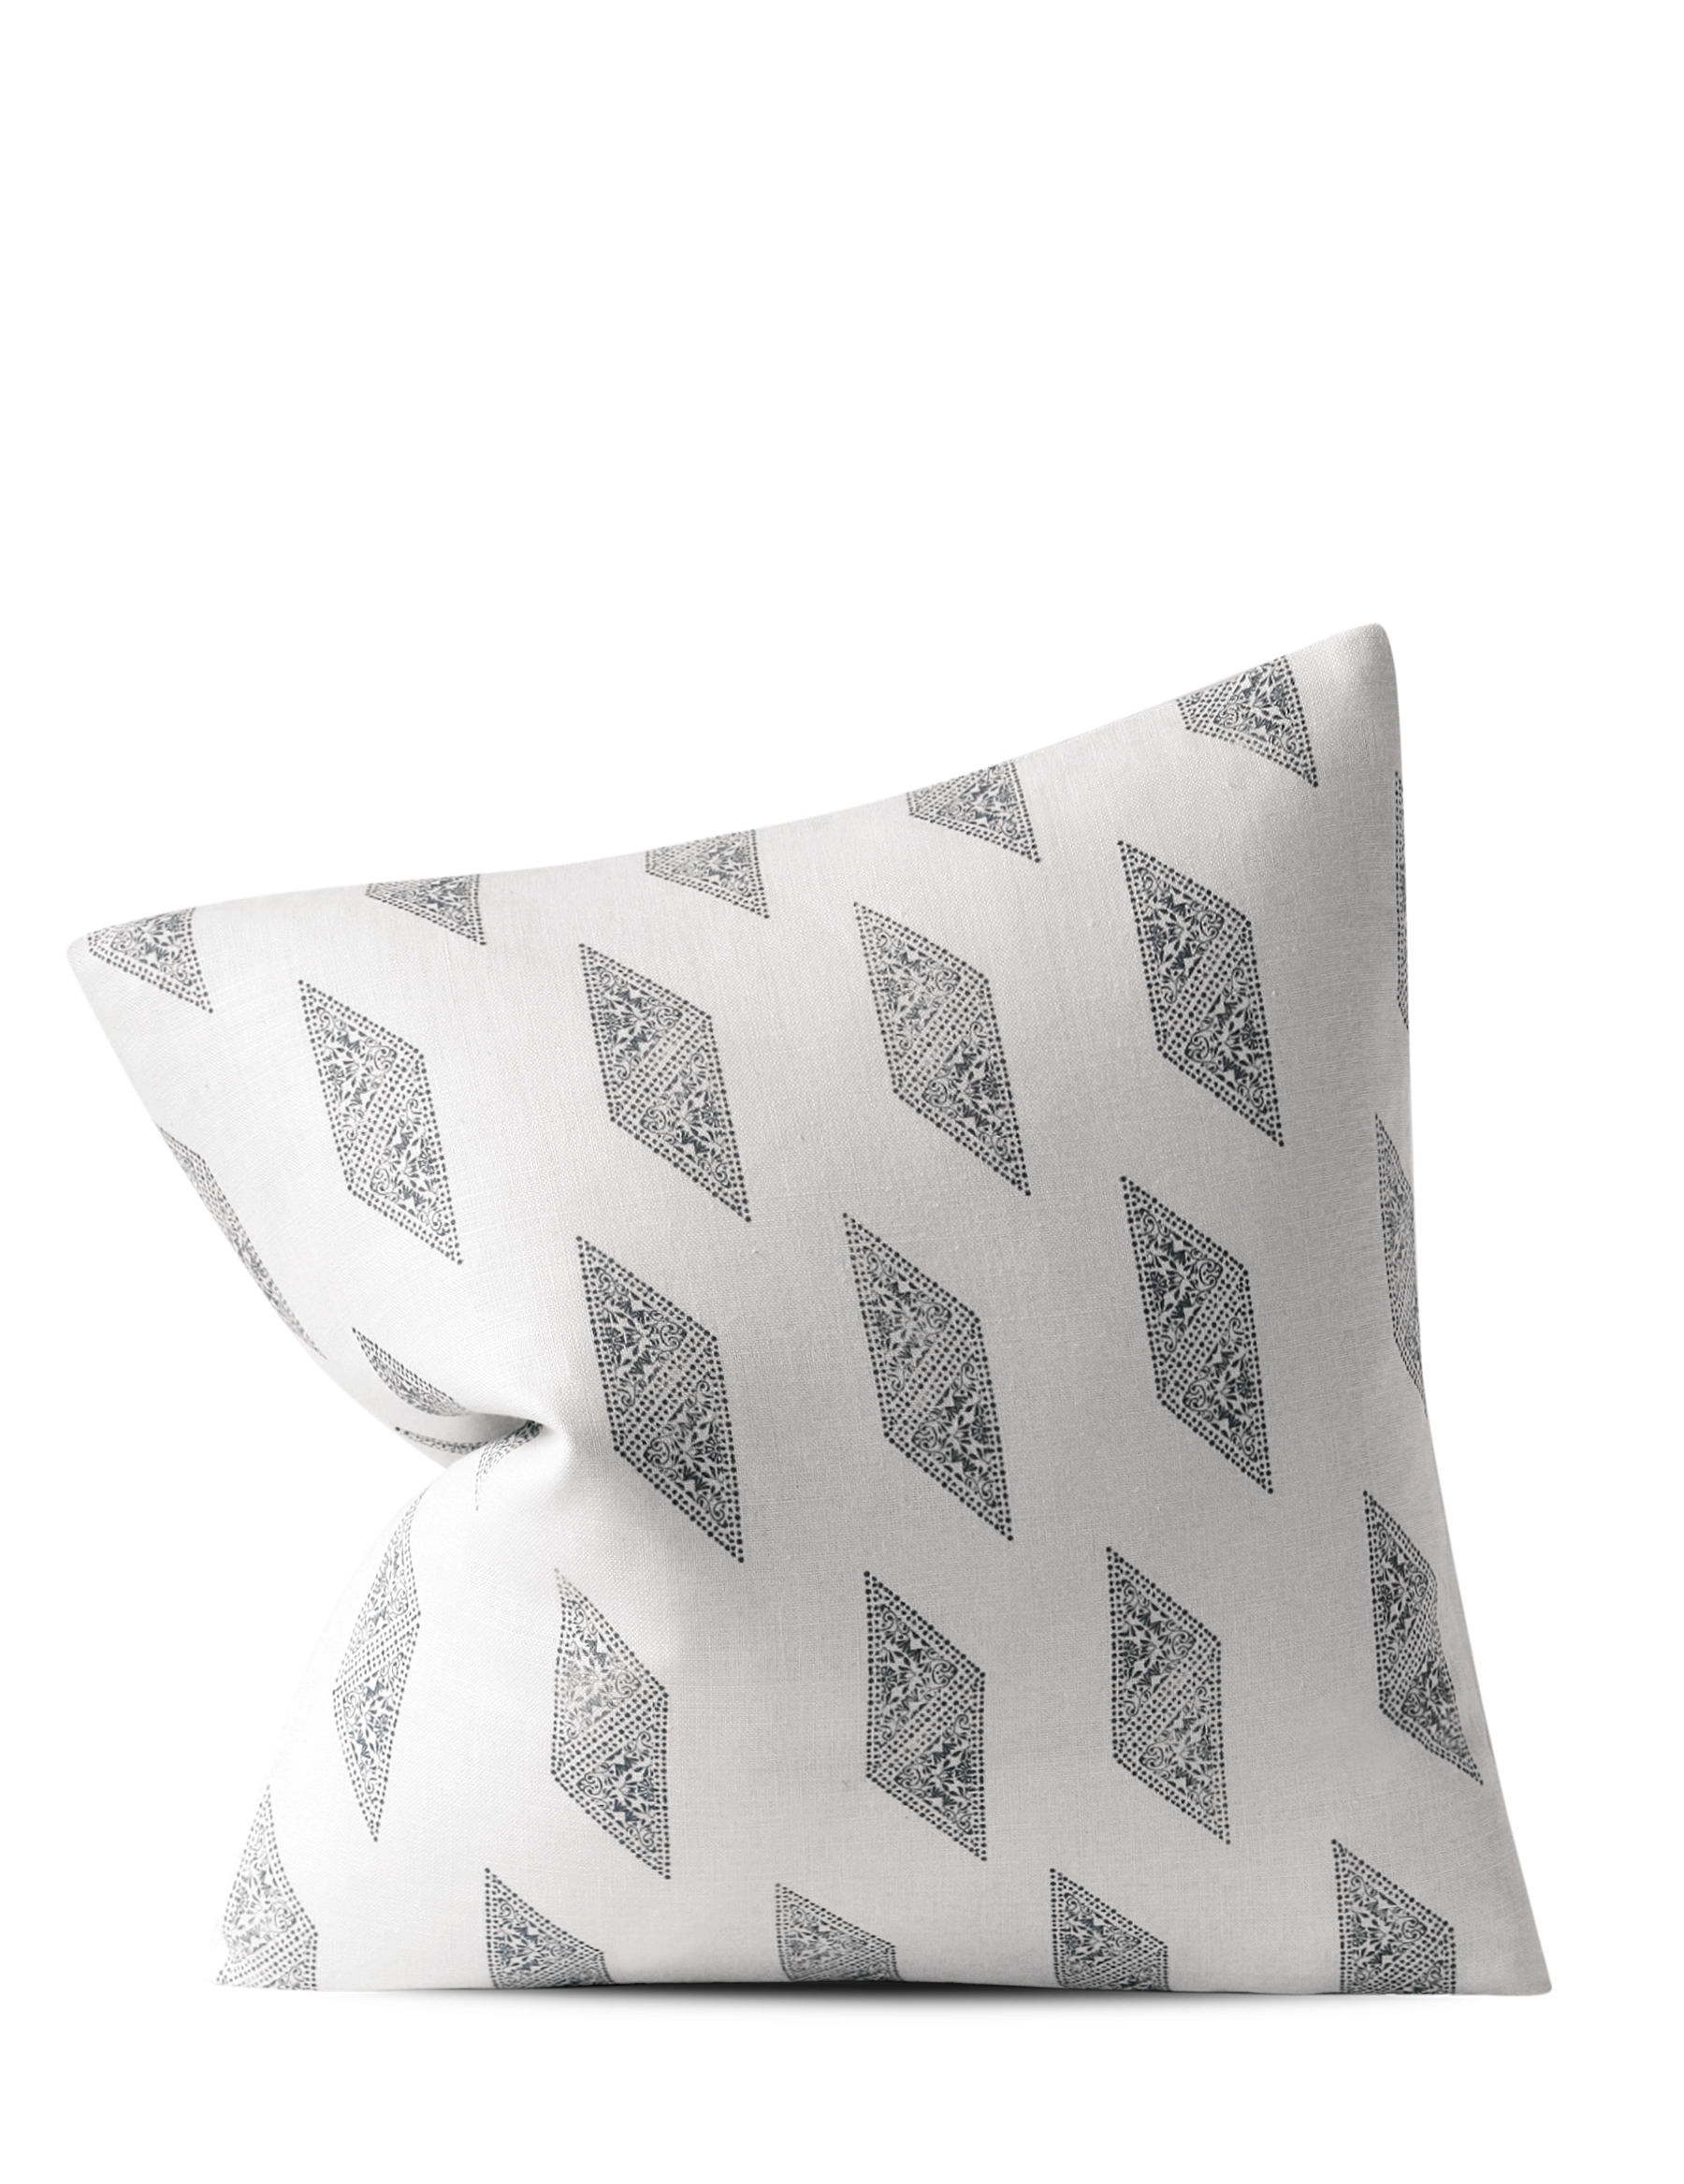 Myriad Pillow / Kohl Oyster